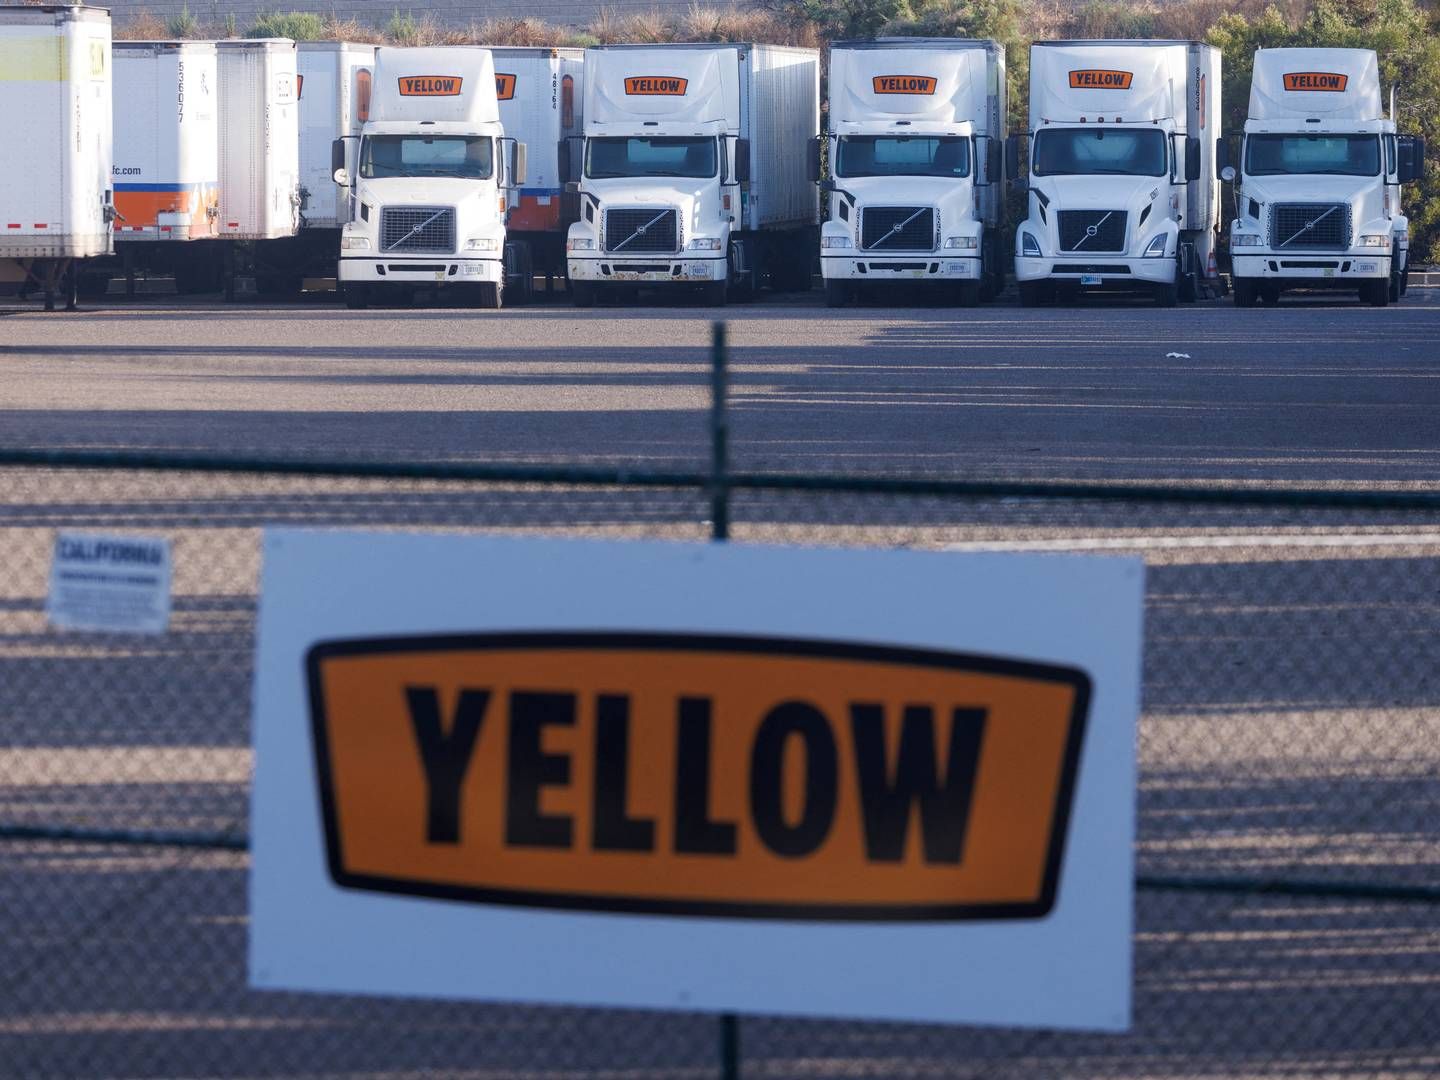 Det amerikanske fragtselskab Yellow indgav i august en konkursbegæring. | Foto: Mike Blake/Reuters/Ritzau Scanpix